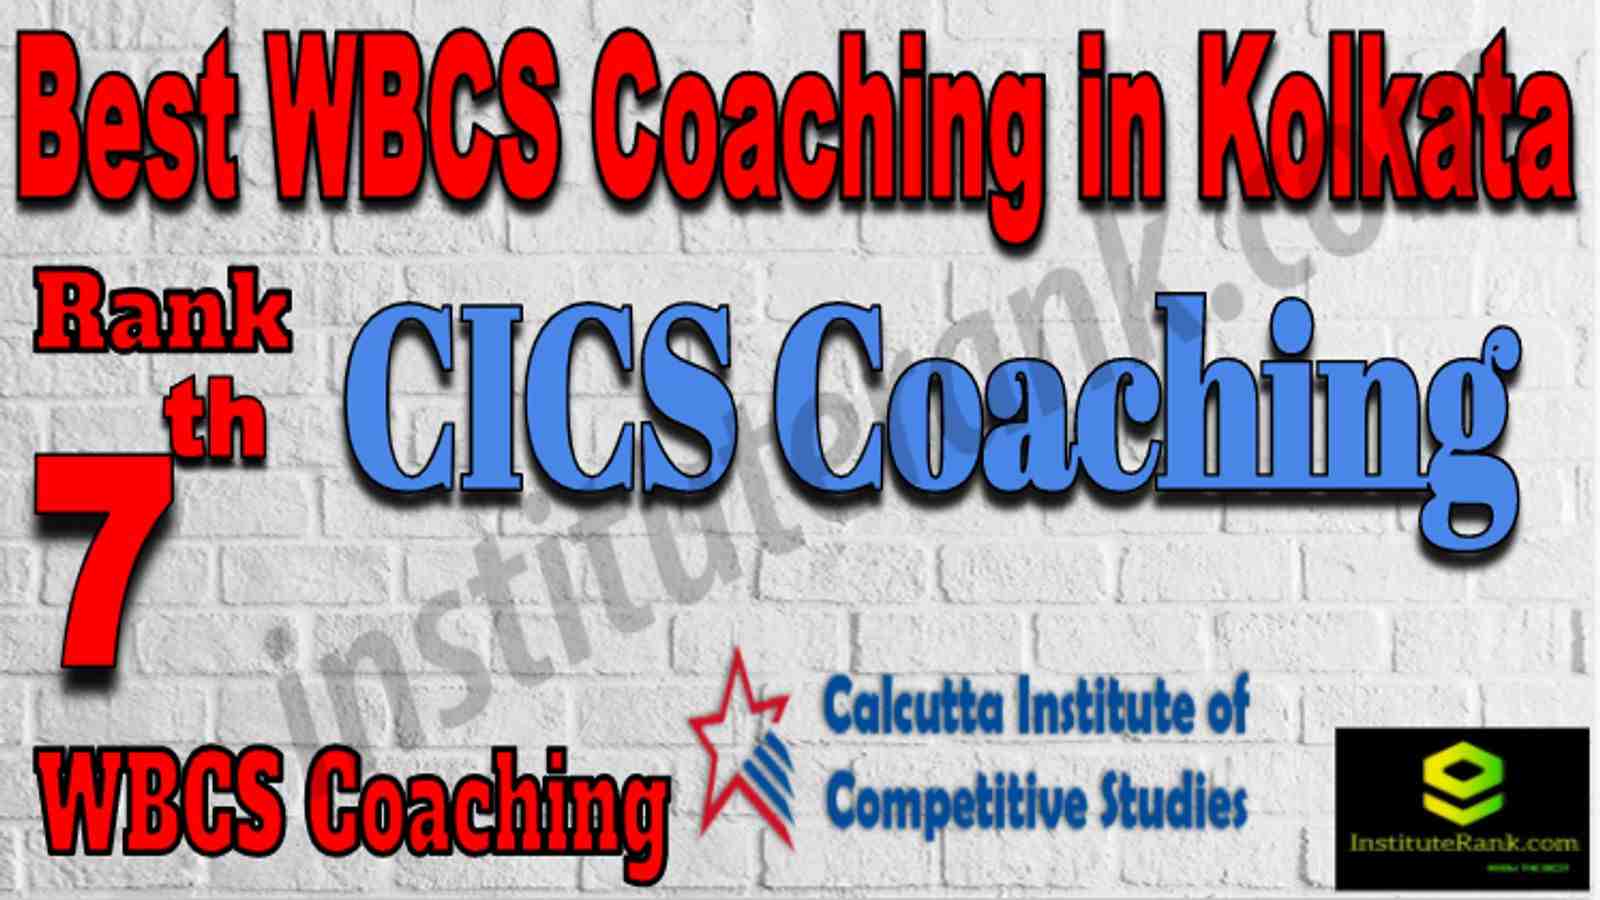 Rank 7 Best WBCS Coaching in Kolkata